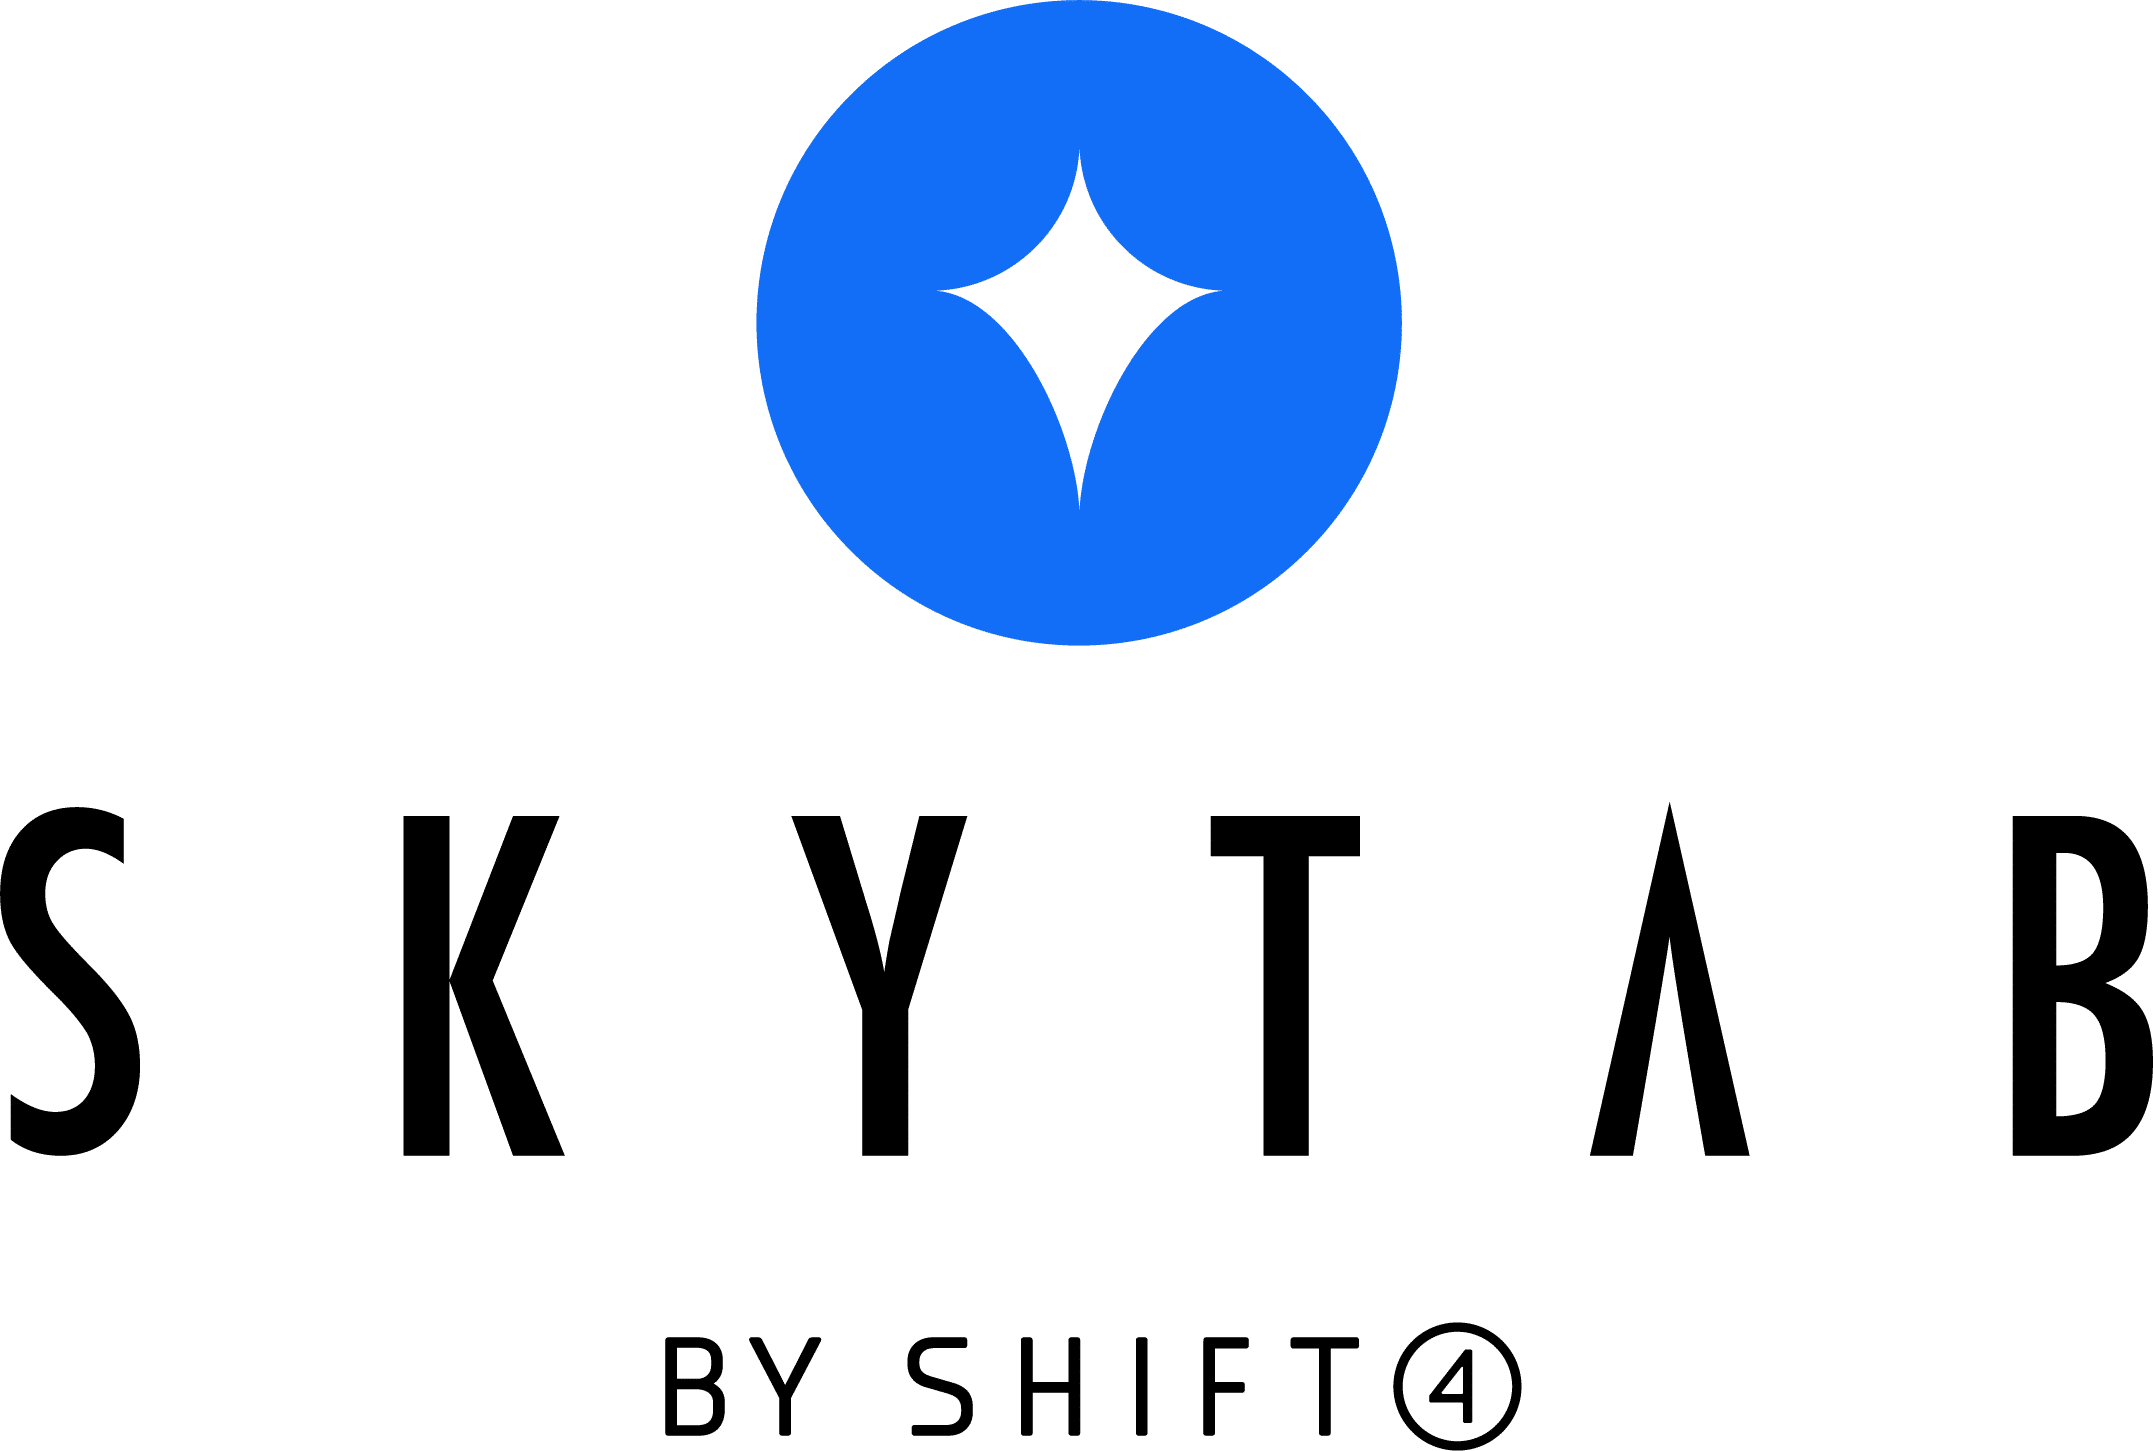 SkyTab POS logo